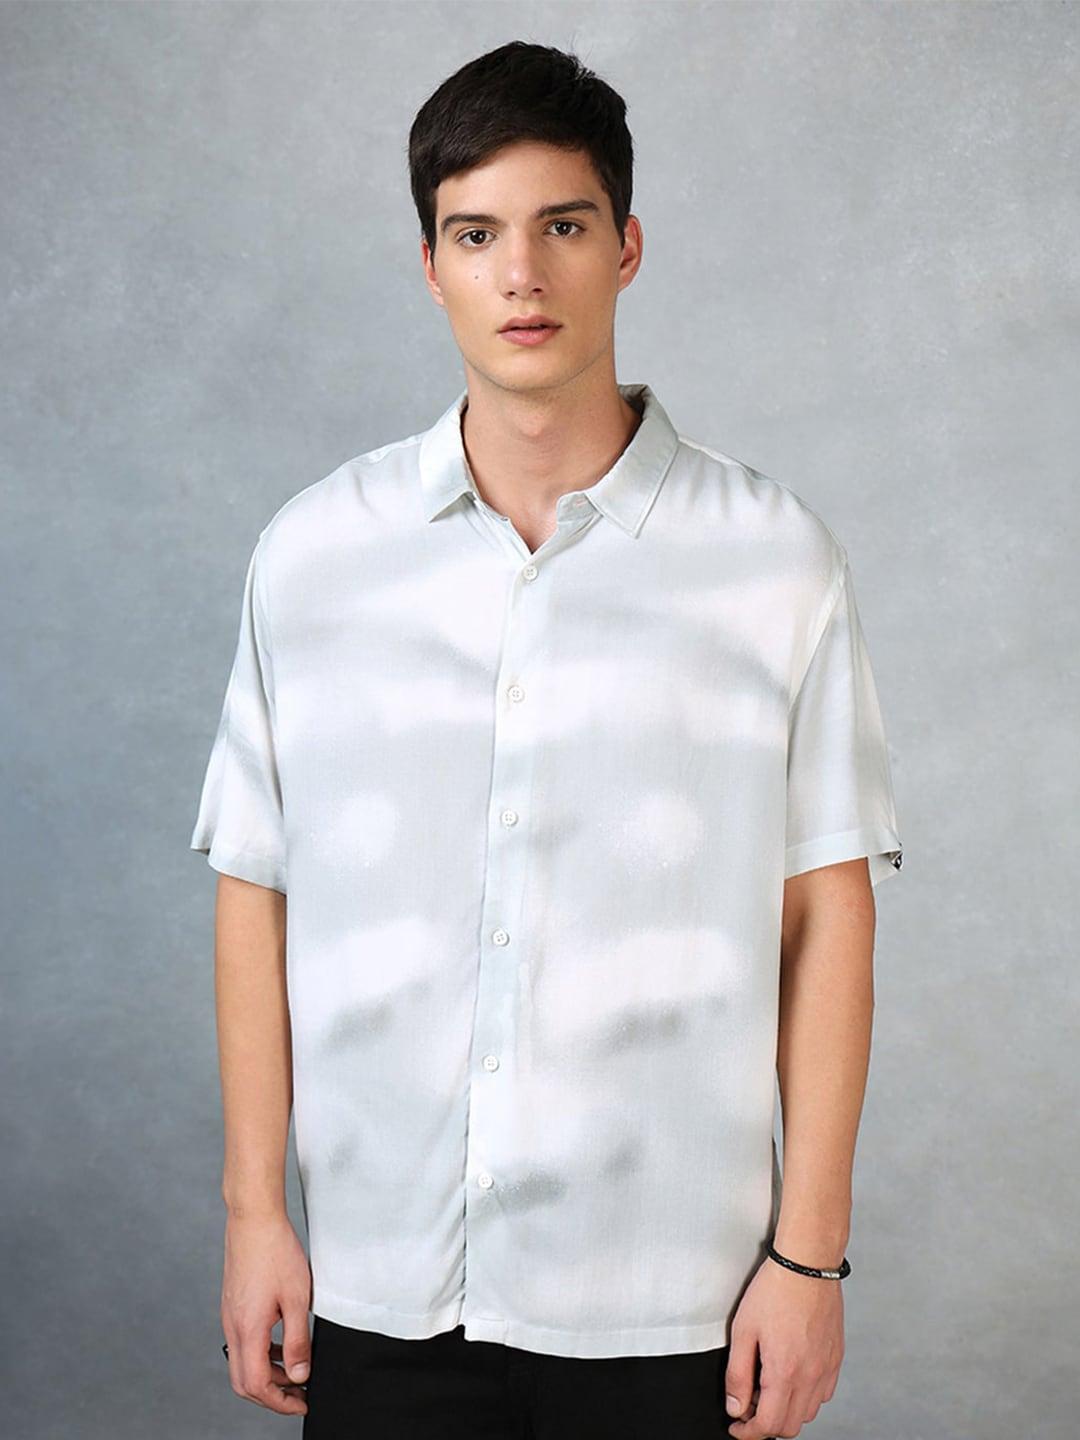 bewakoof-abstract-printed-oversized-casual-shirt